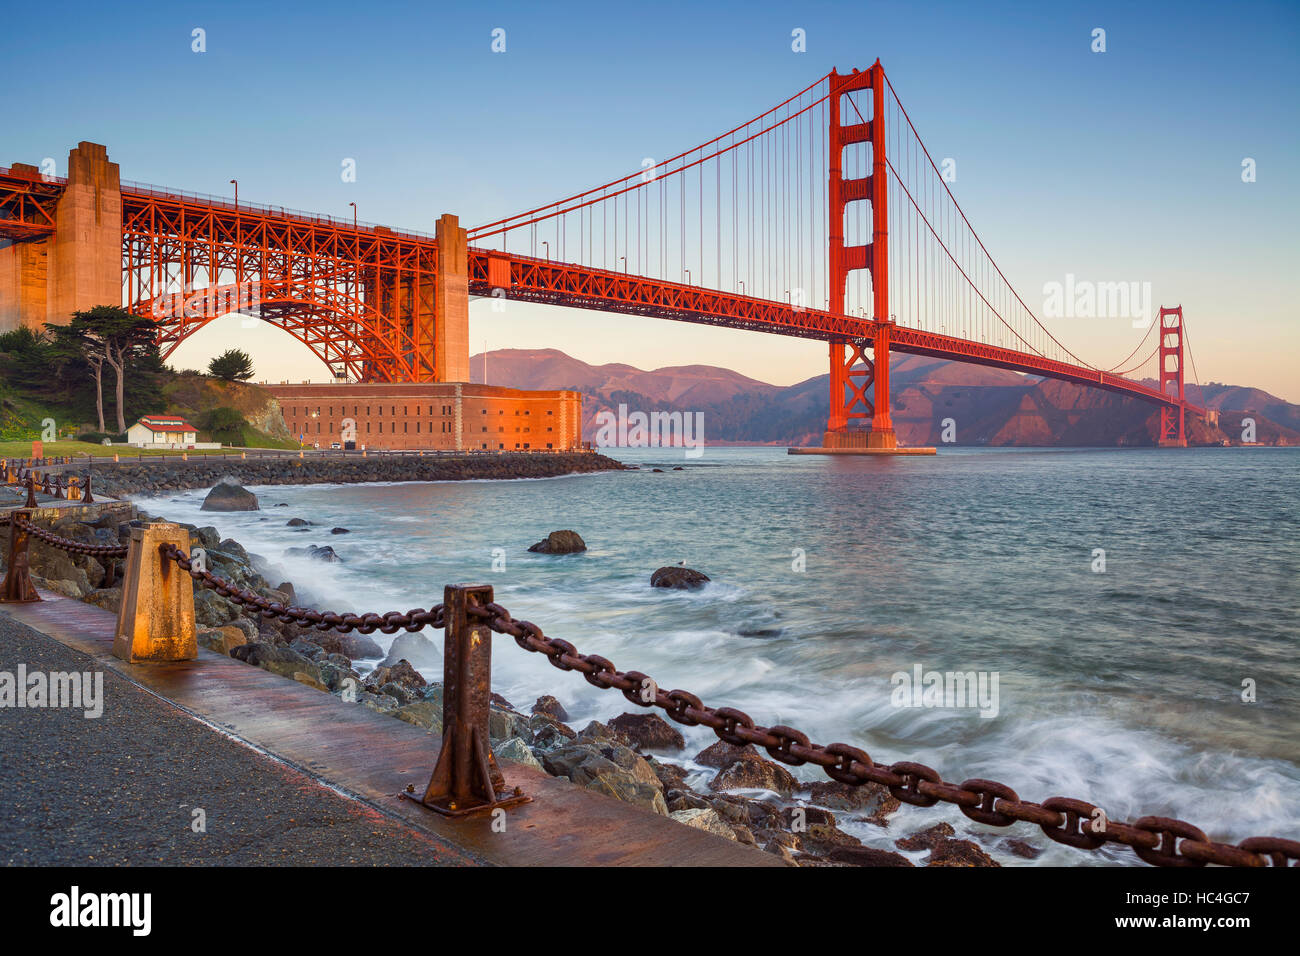 San Francisco. Image of Golden Gate Bridge in San Francisco, California during sunrise. Stock Photo